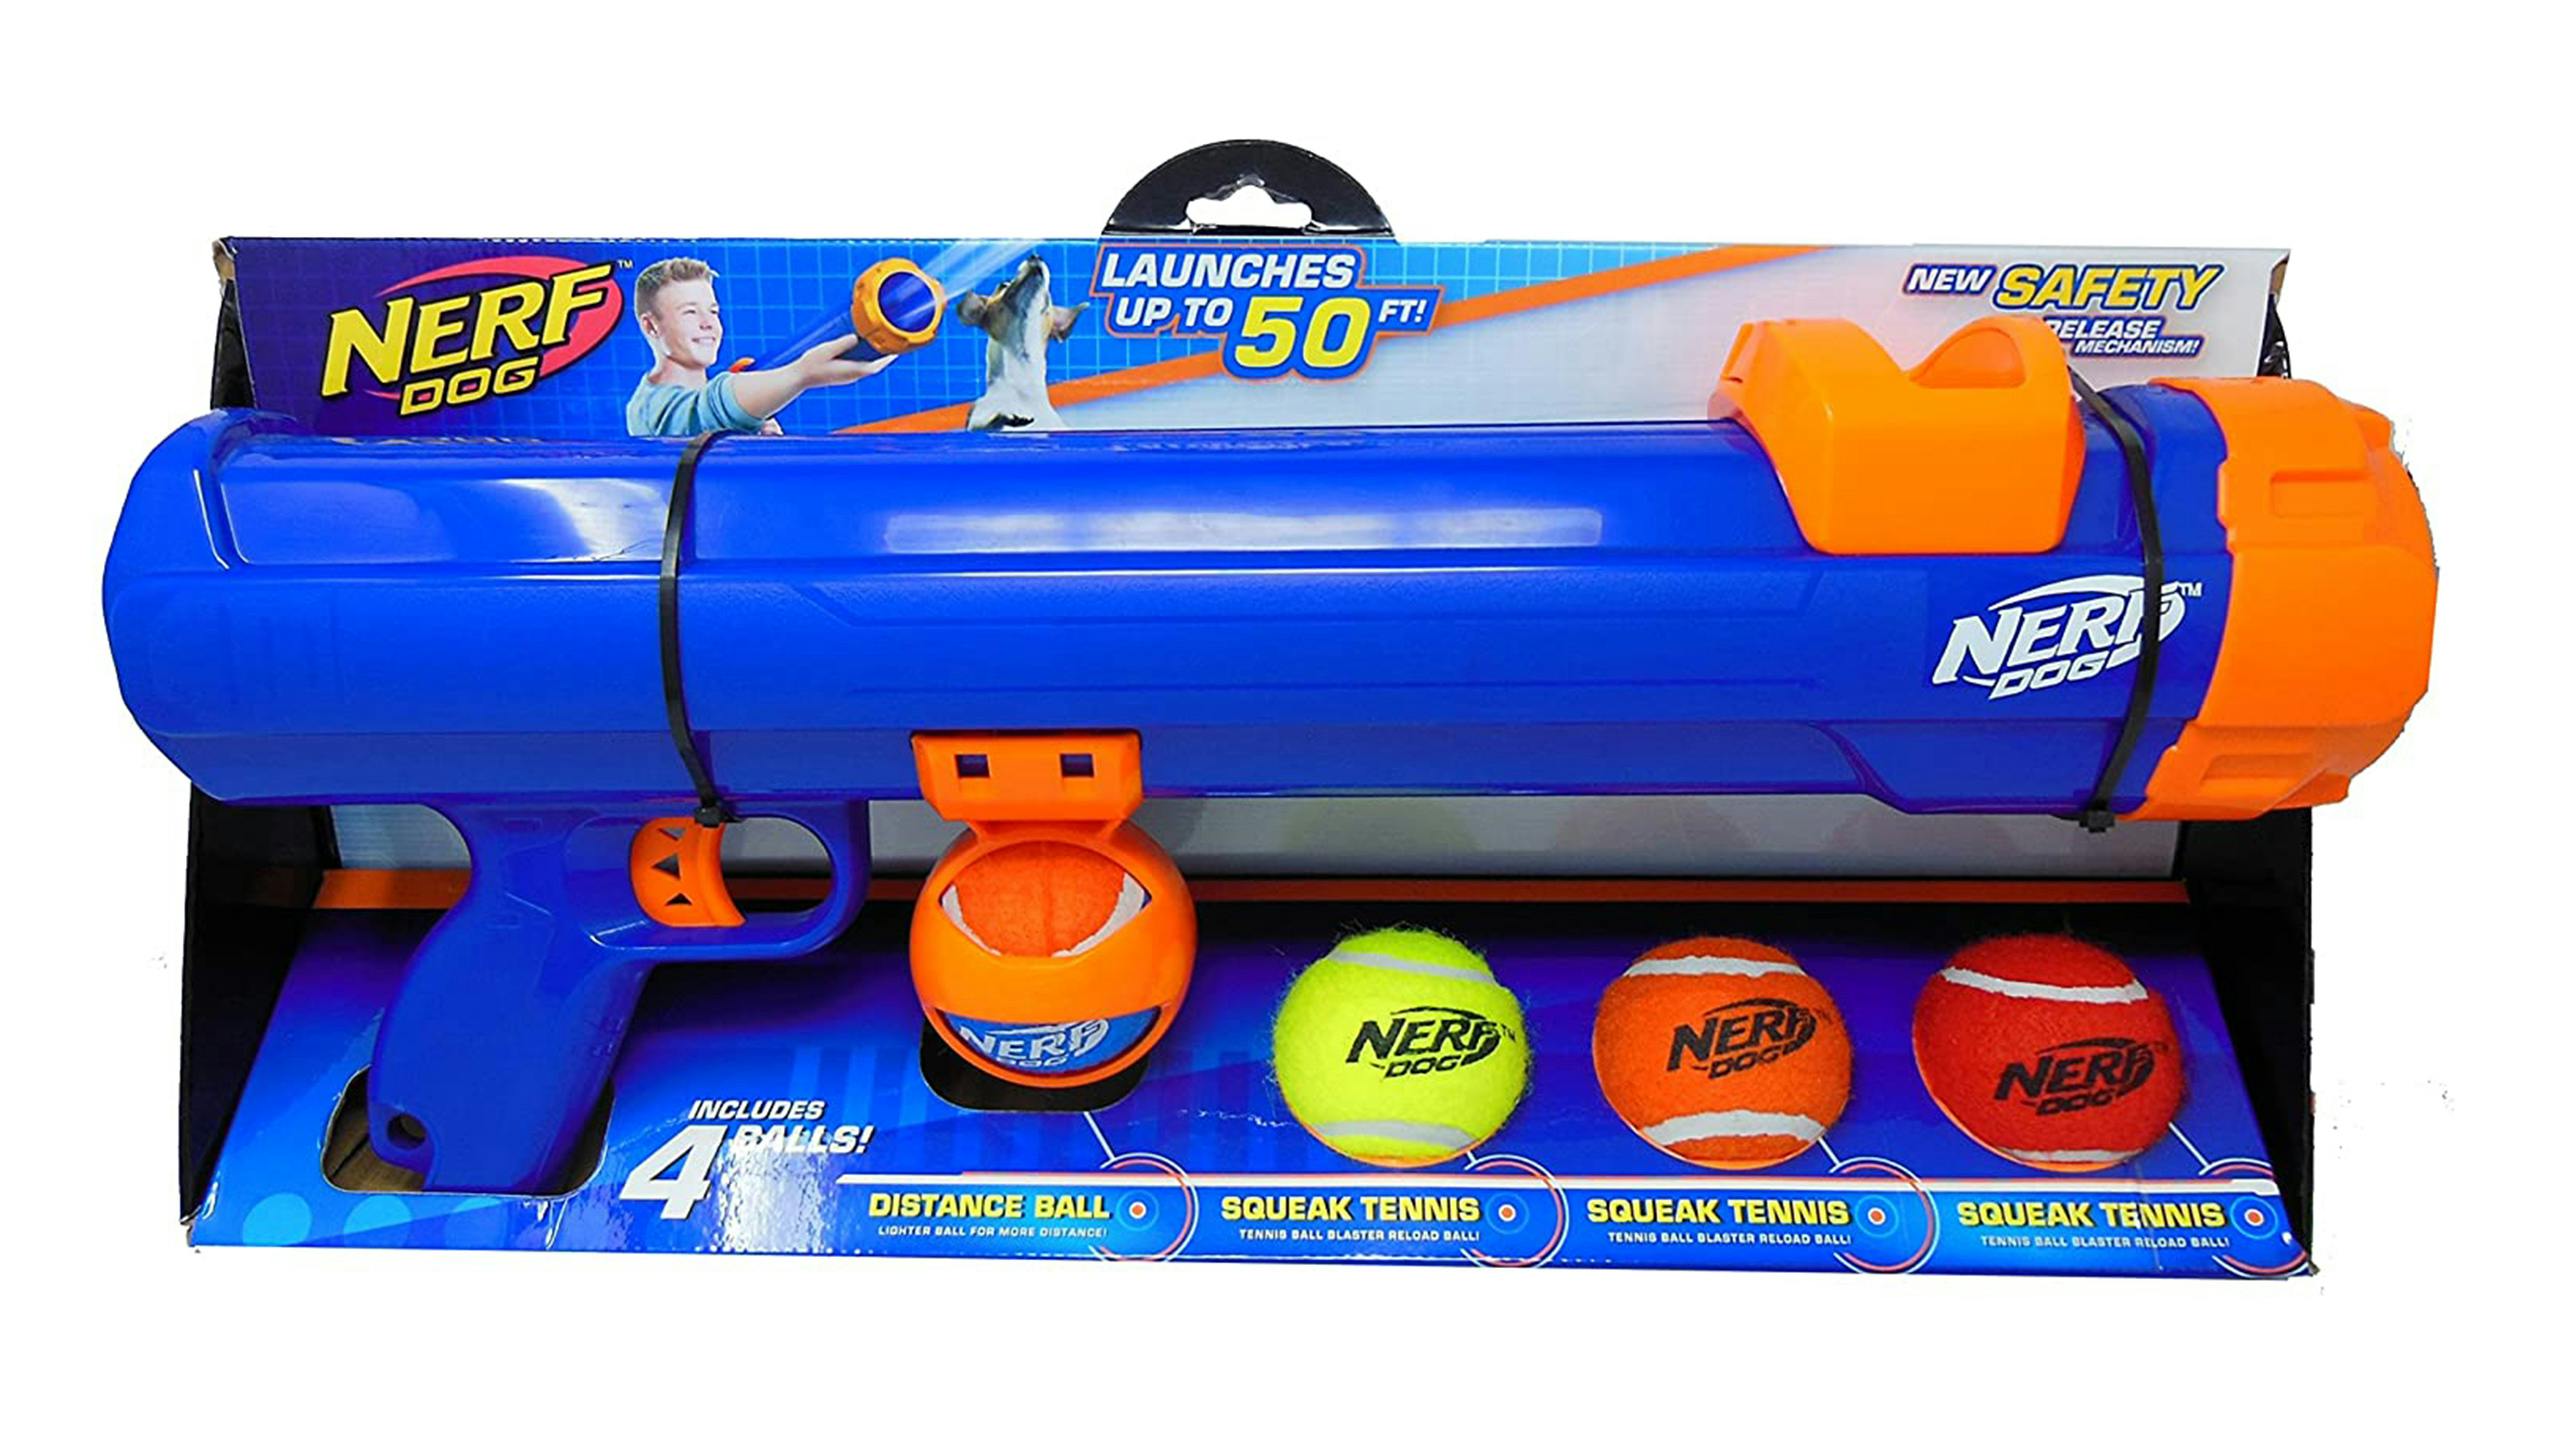 Nerf Dog ball gun product image.